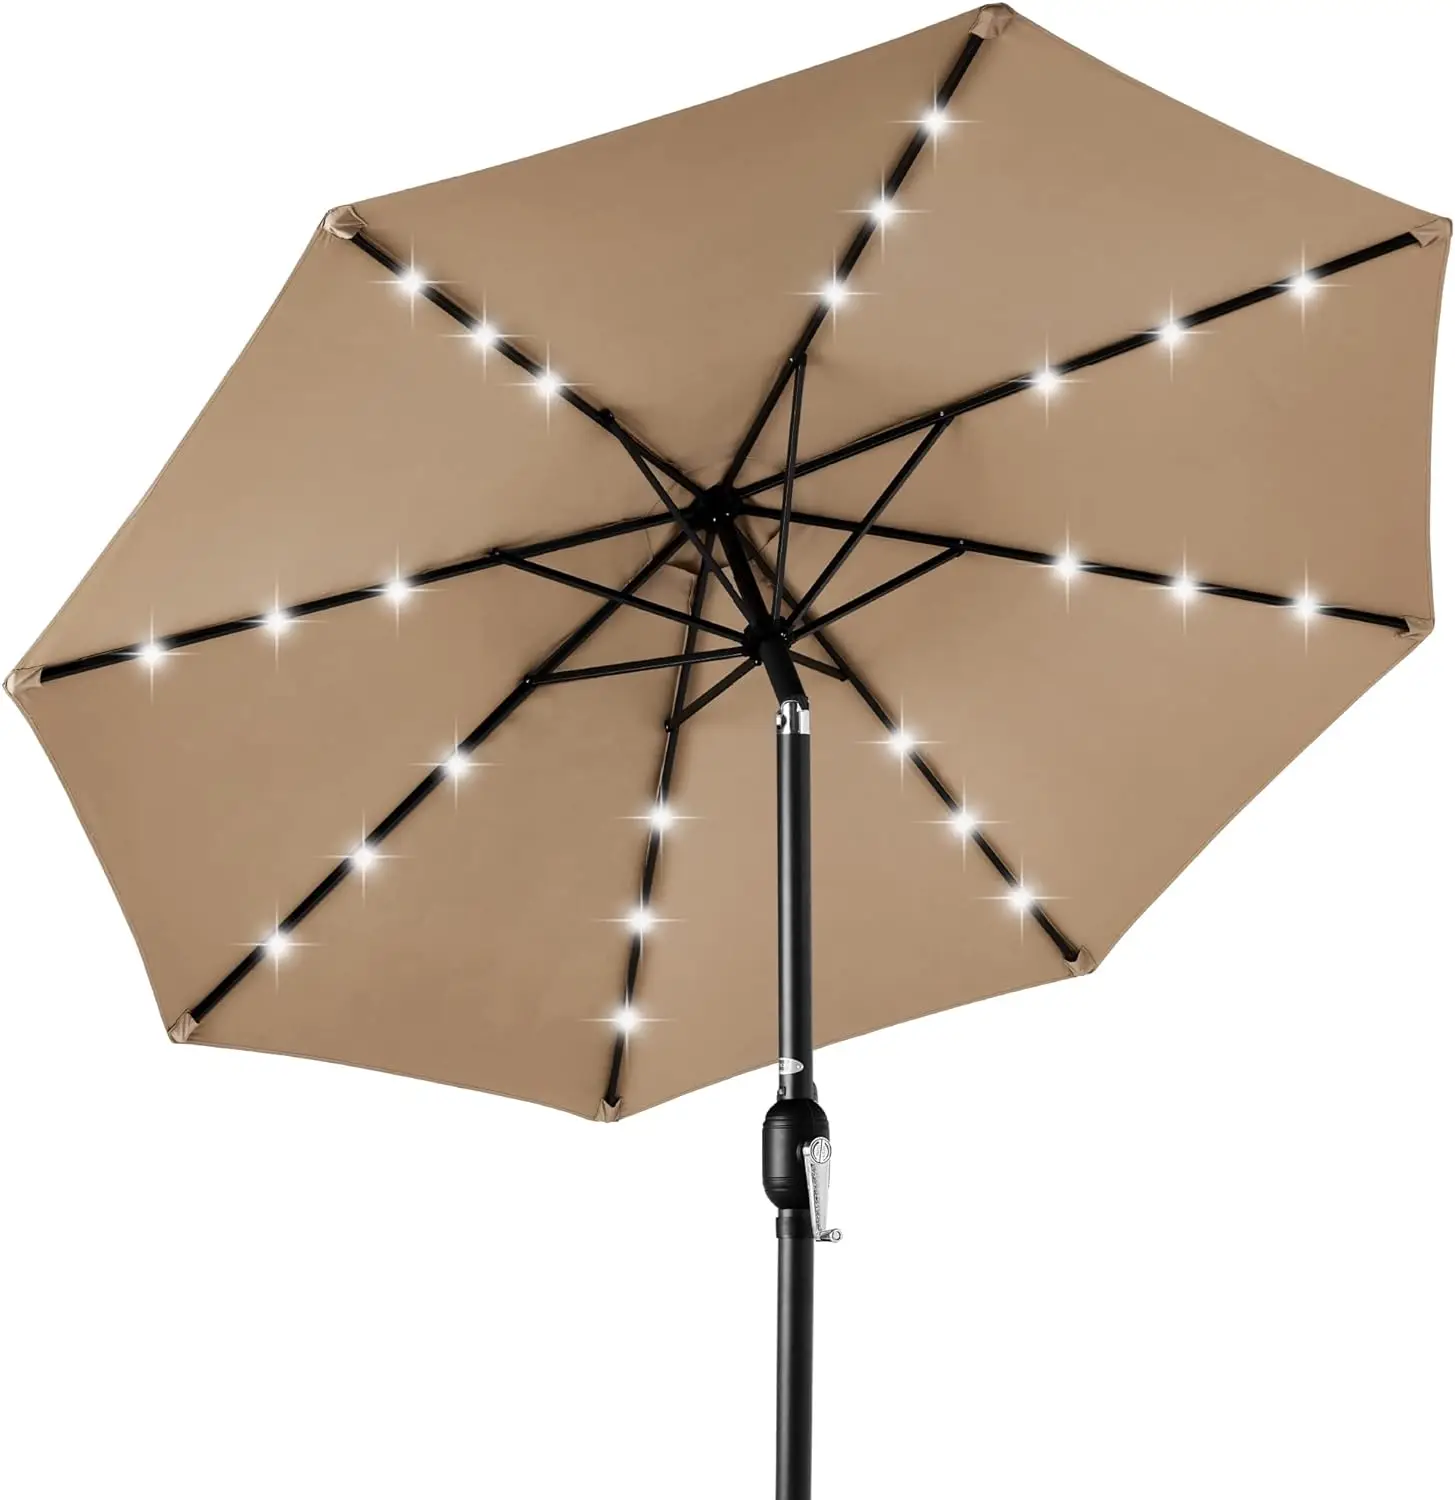 

10ft Solar Powered Aluminum Polyester LED Lighted Patio Umbrella w/Tilt Adjustment and UV-Resistant Fabric - Tan